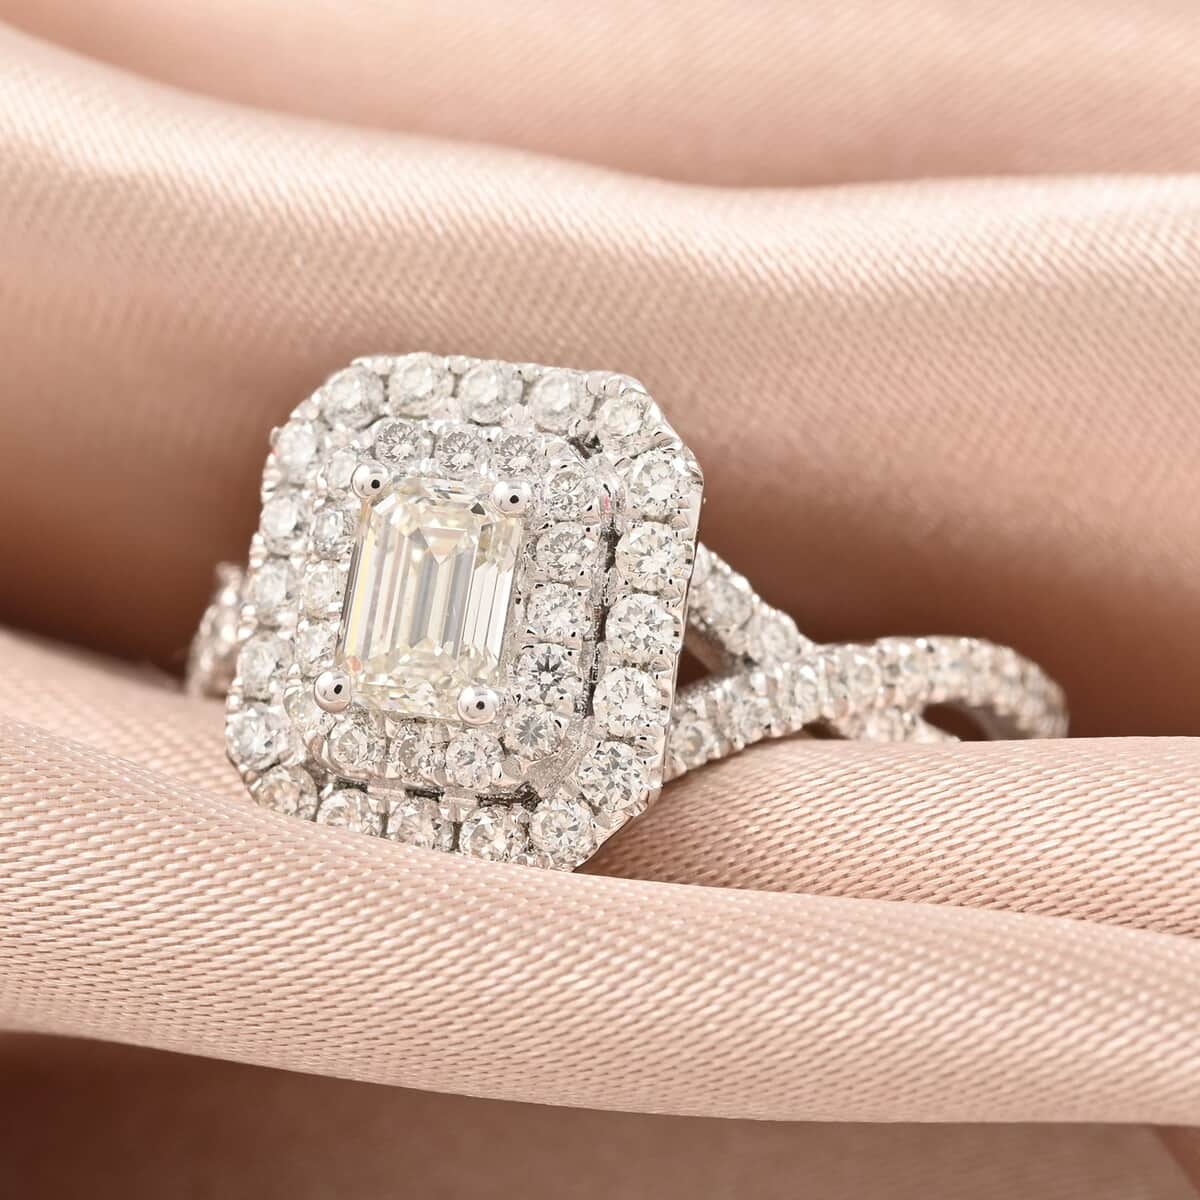 Modani 950 Platinum Diamond SI - GH Ring (Size 10.0) 7 Grams 1.30 ctw (Del. in 15-20 Days) image number 1